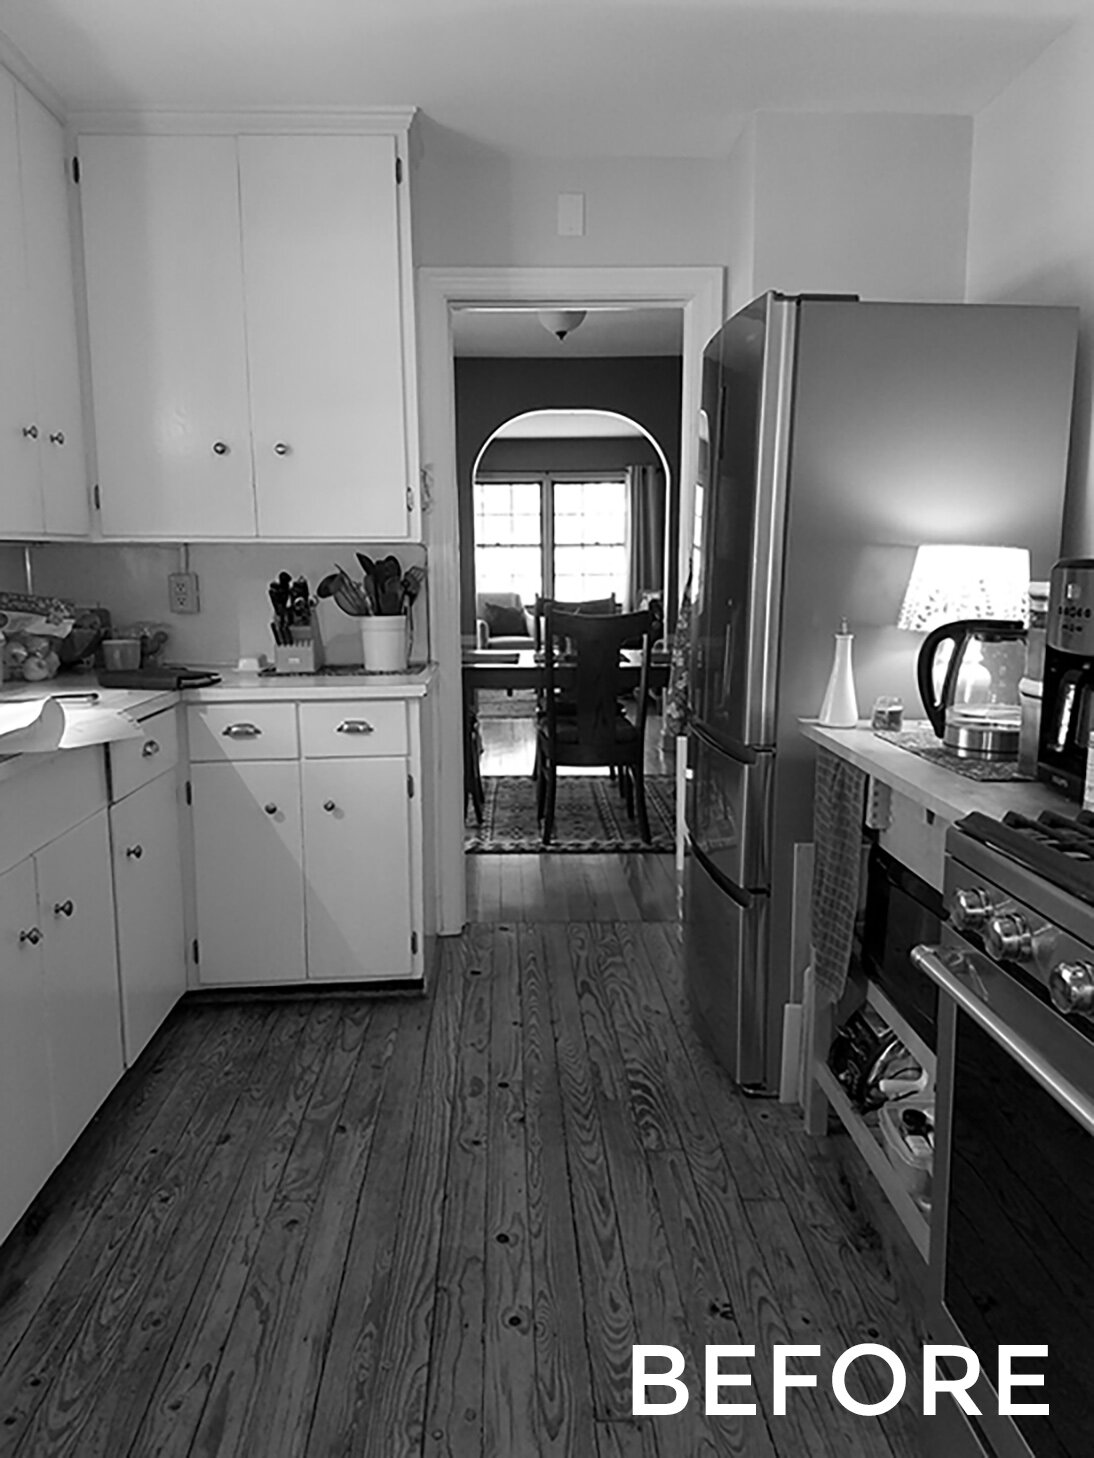 cck kitchen before copy.jpg